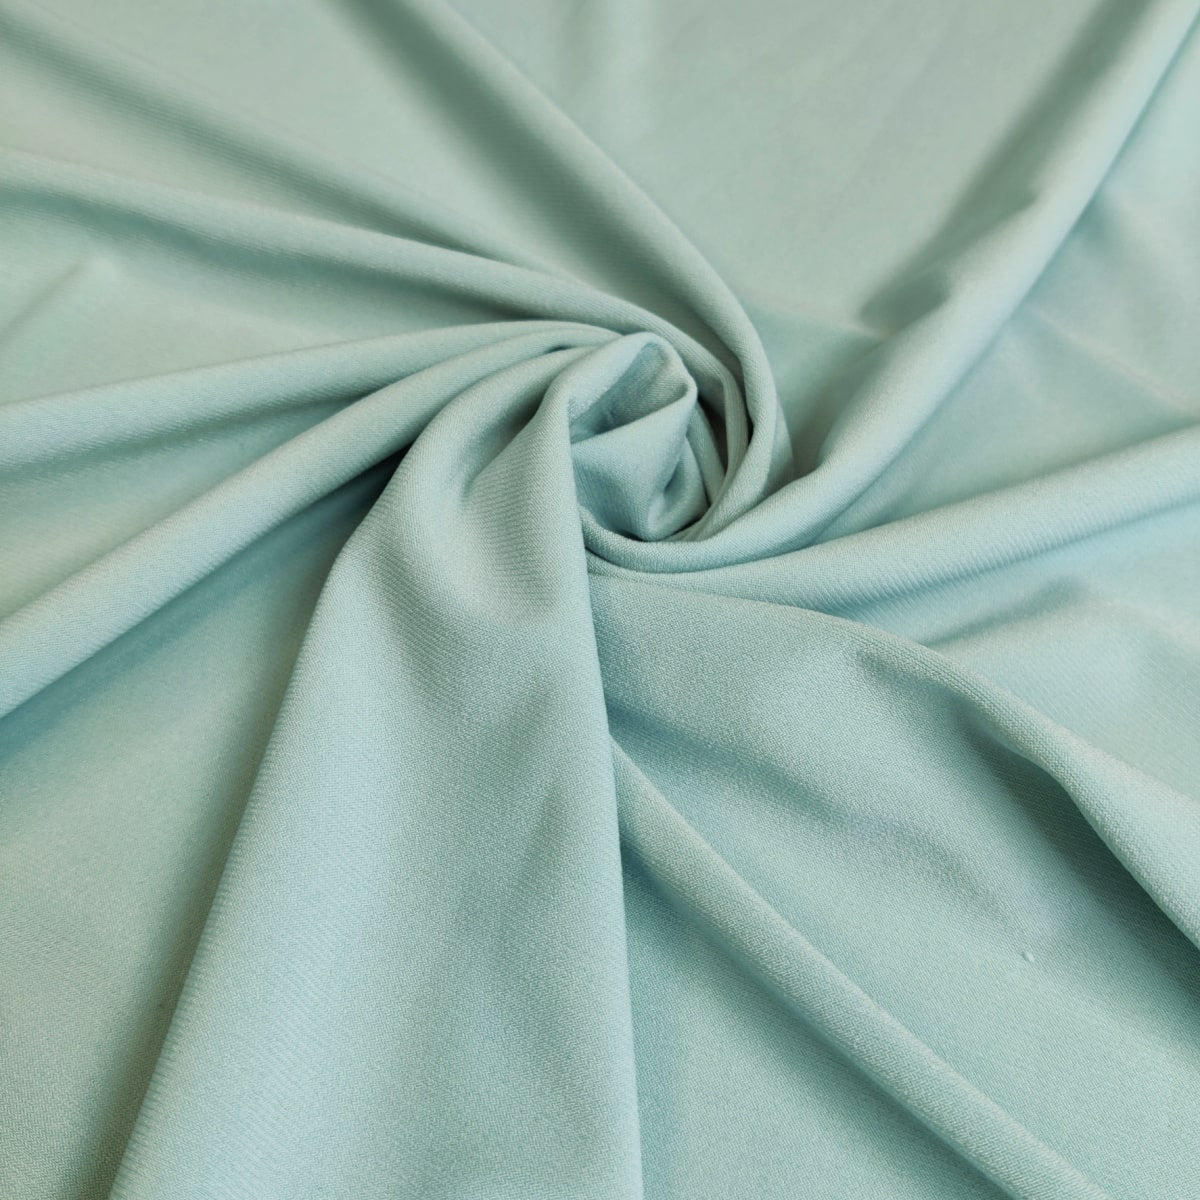 ITY Silky Stretch Knit Fabric, 1119557